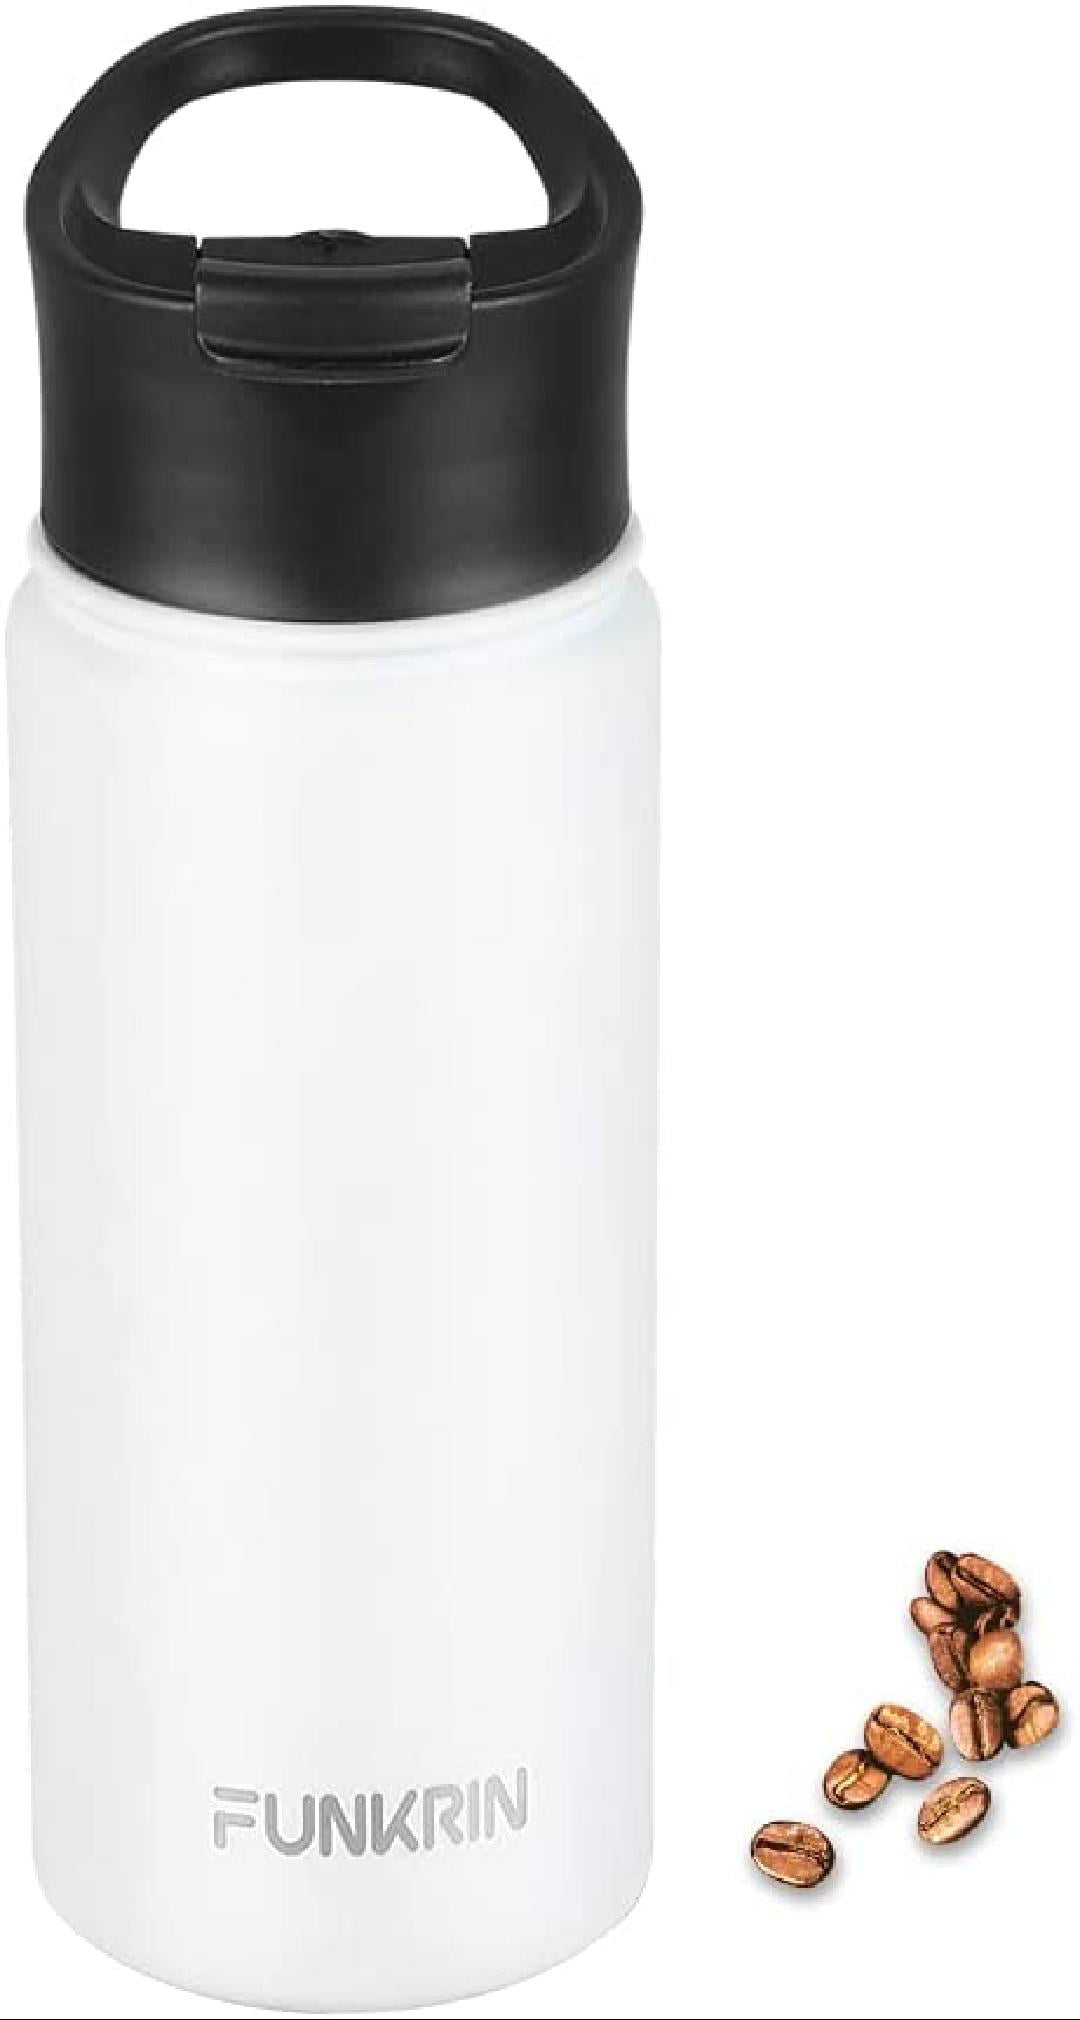 OXO Good Grips 16oz Travel Coffee Mug With Leakproof SimplyClean™ Lid - Jade